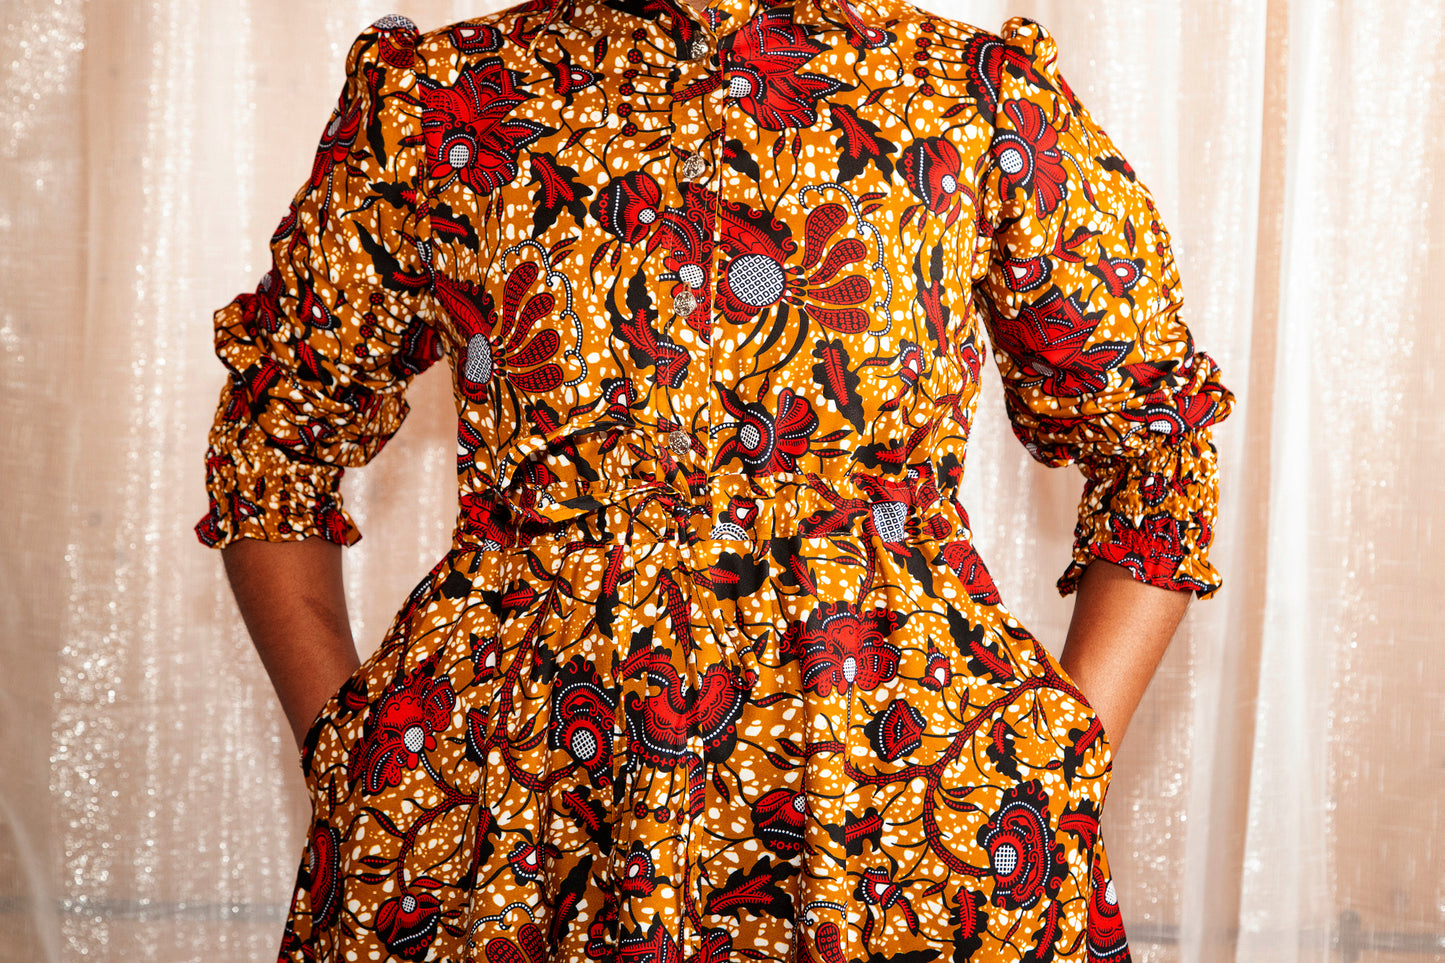 Onyeka African Print Shirt Dress in Brown Ankara Dress